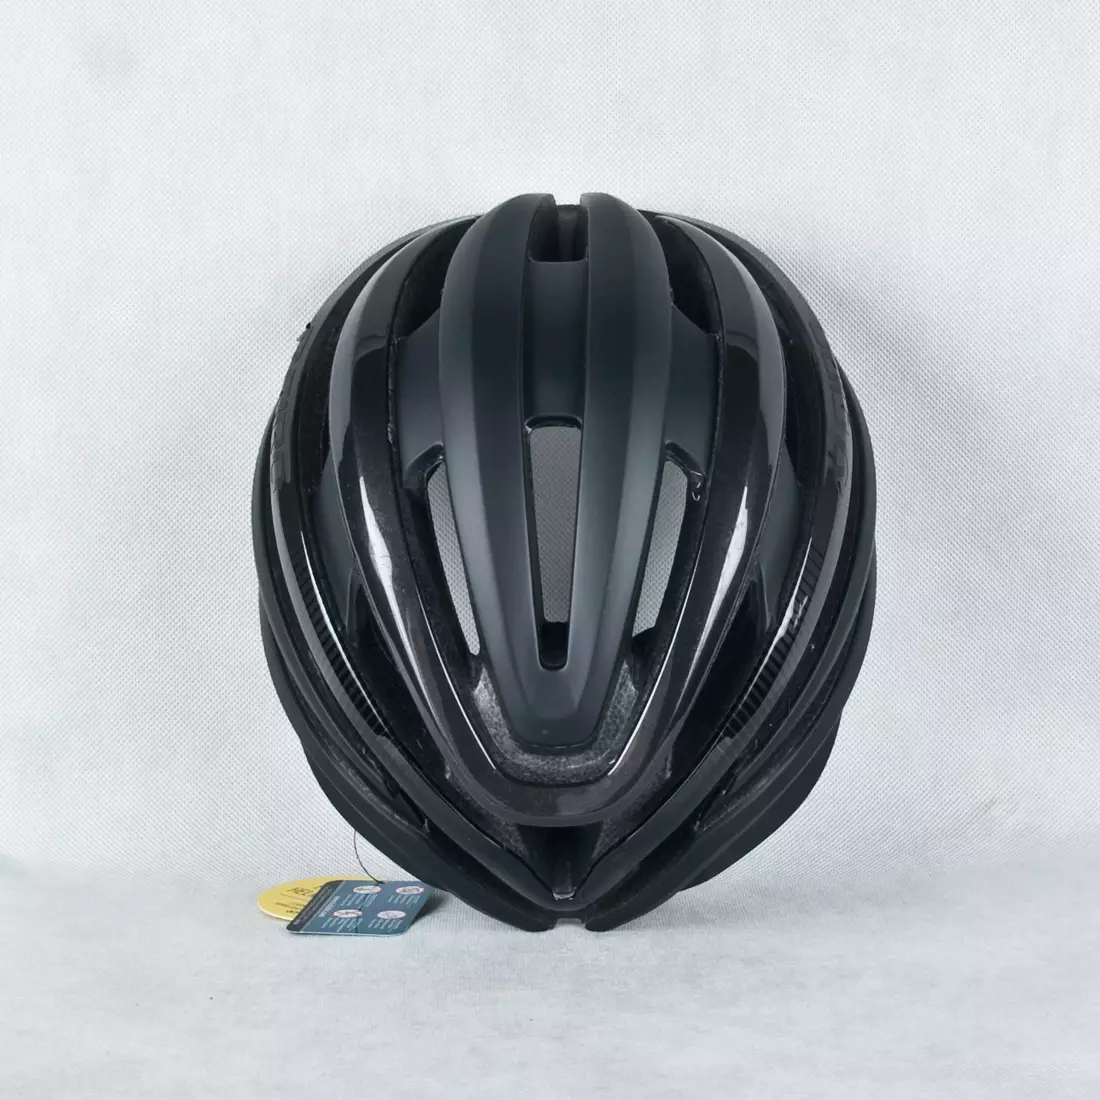 GIRO CINDER MIPS - fekete matt kerékpáros sisak